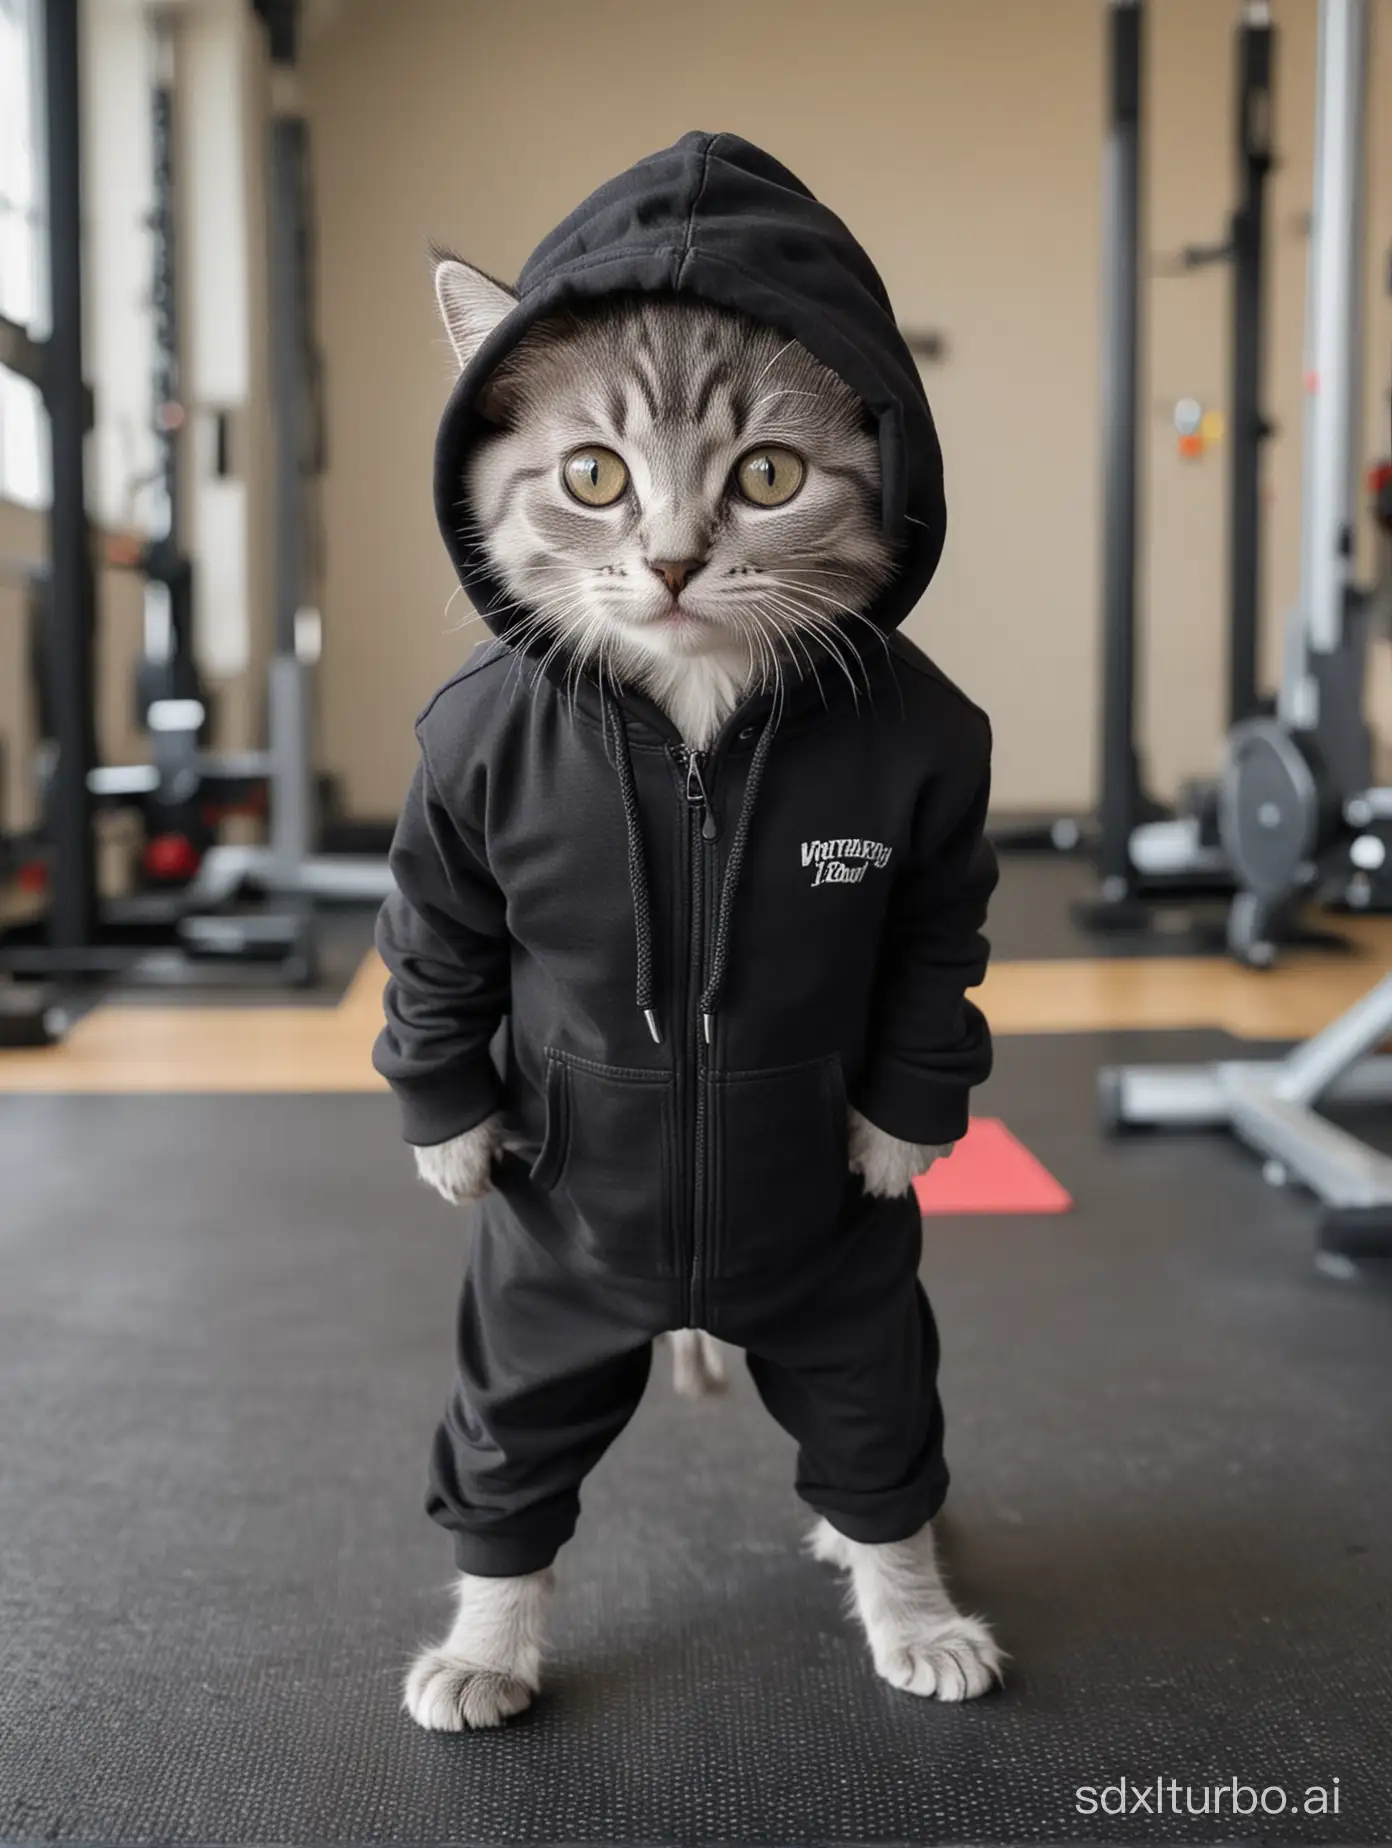 Grey kitten exercising in the gym. Wearing a black hoodie